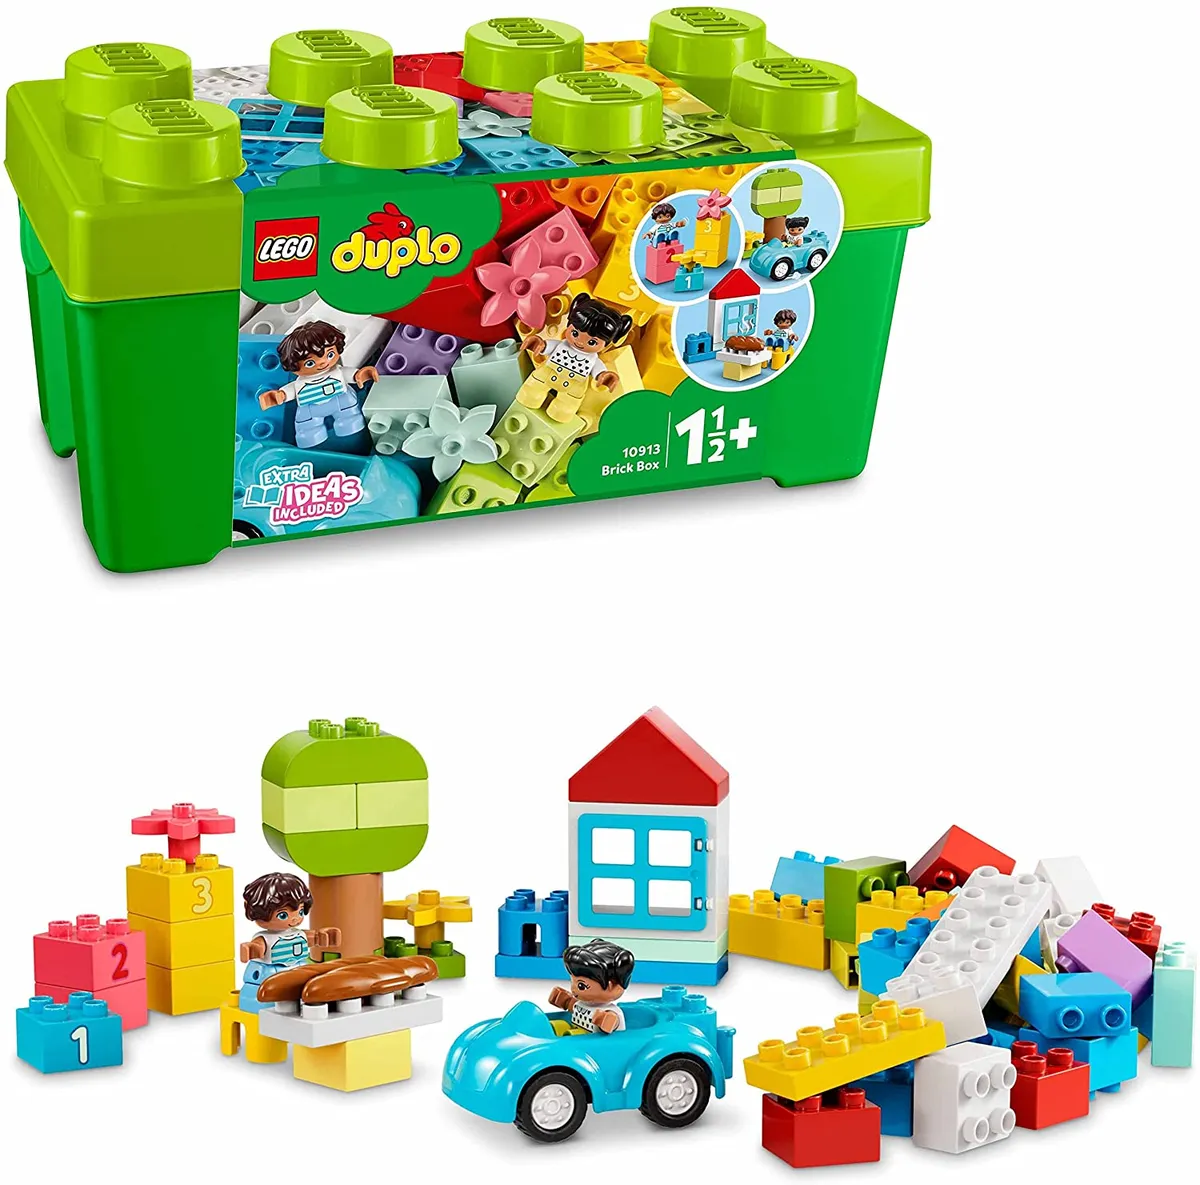 Lego Duplo Classic Brick building set